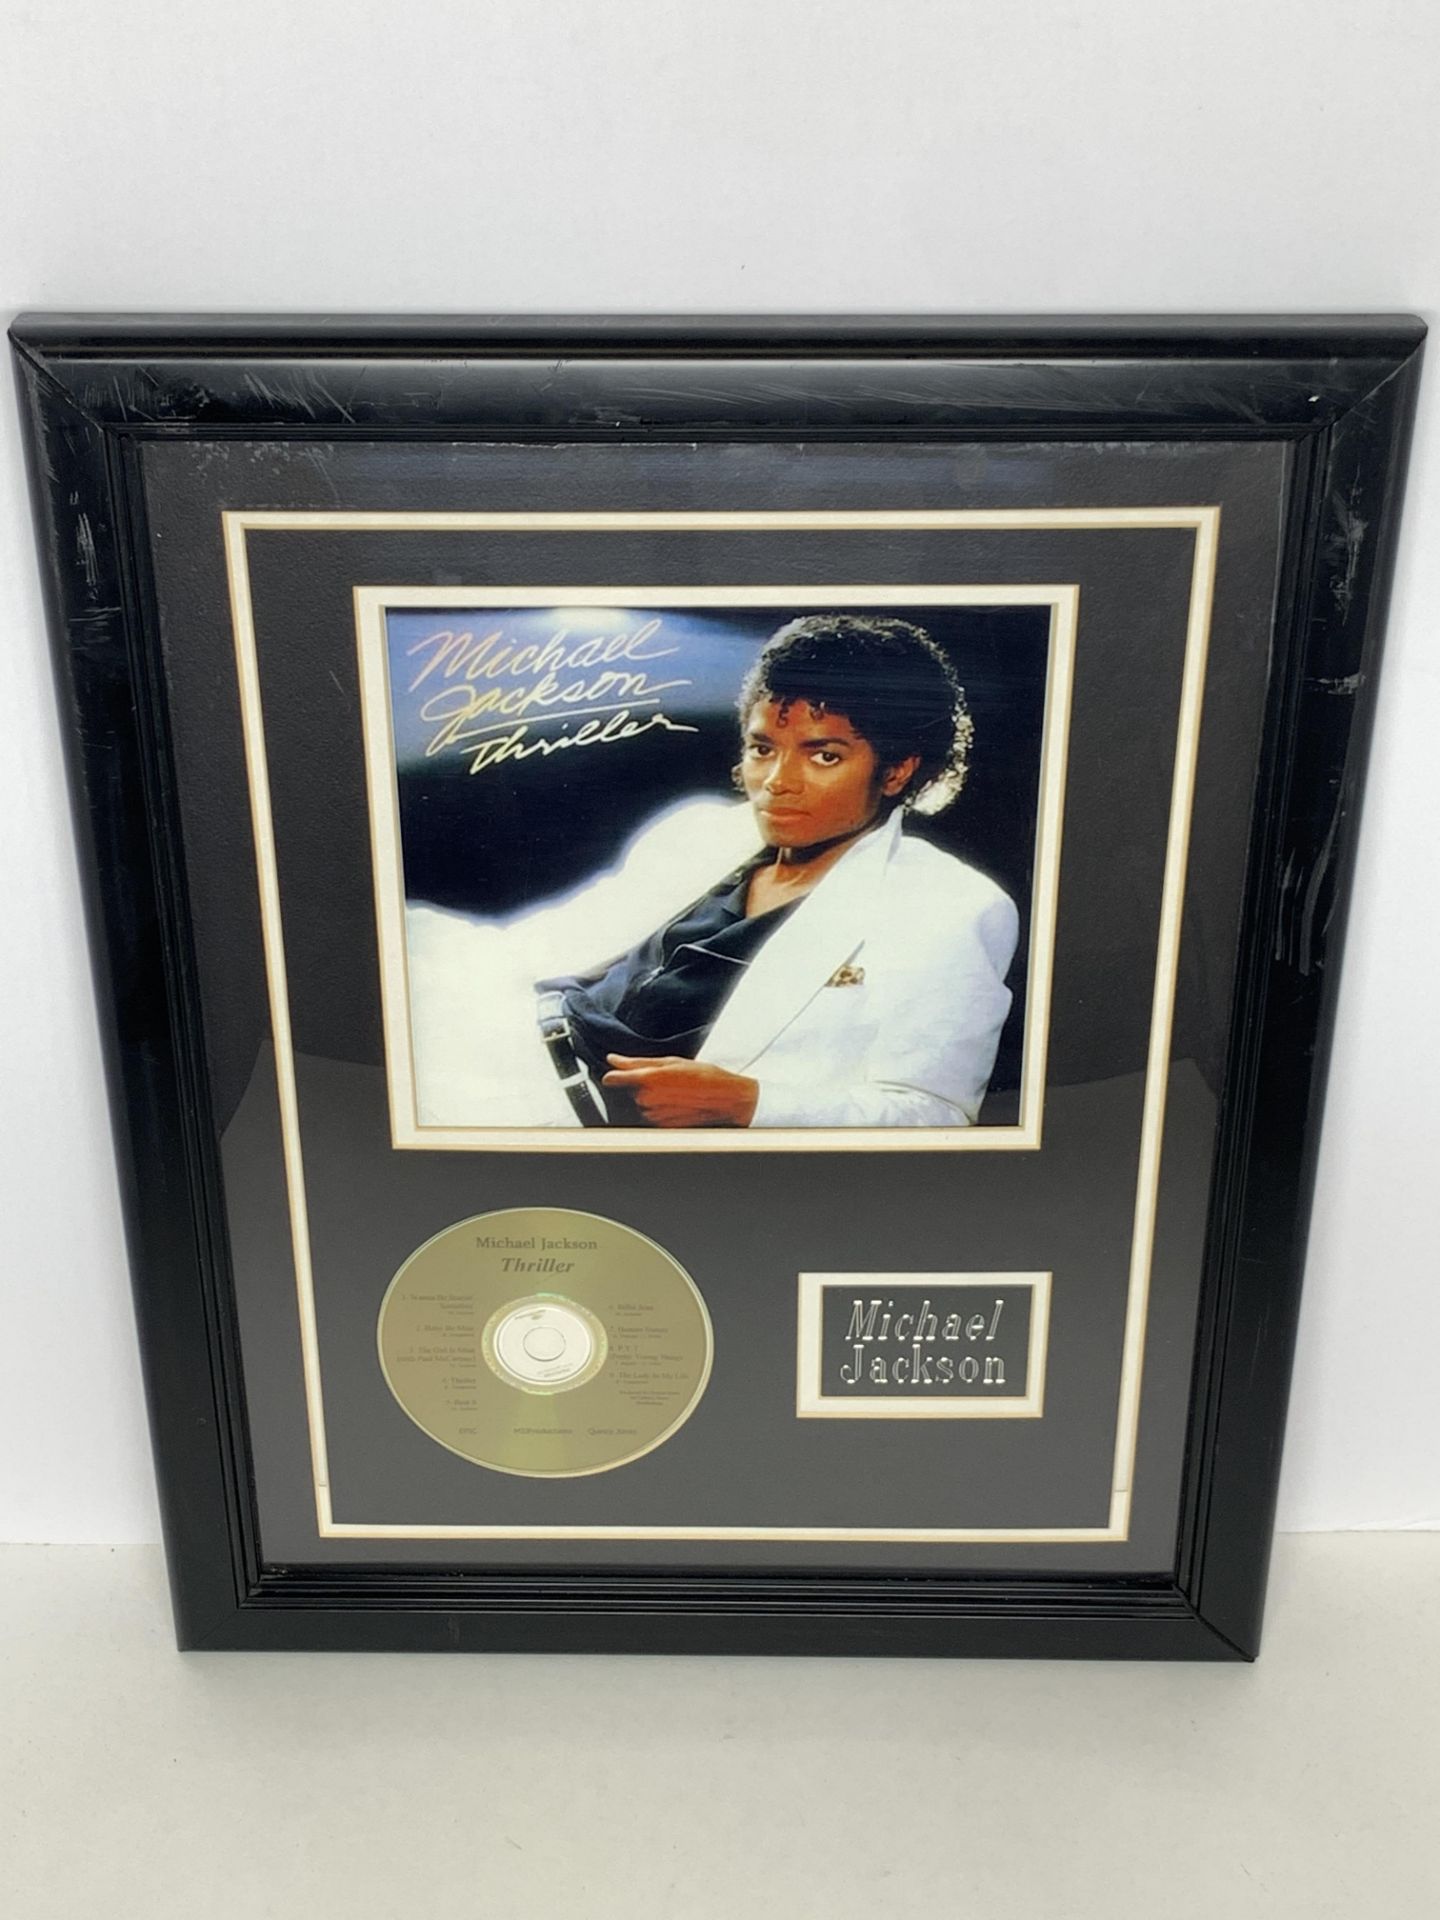 Michael Jackson Framed Memorabilia Photo Plaque and Disc